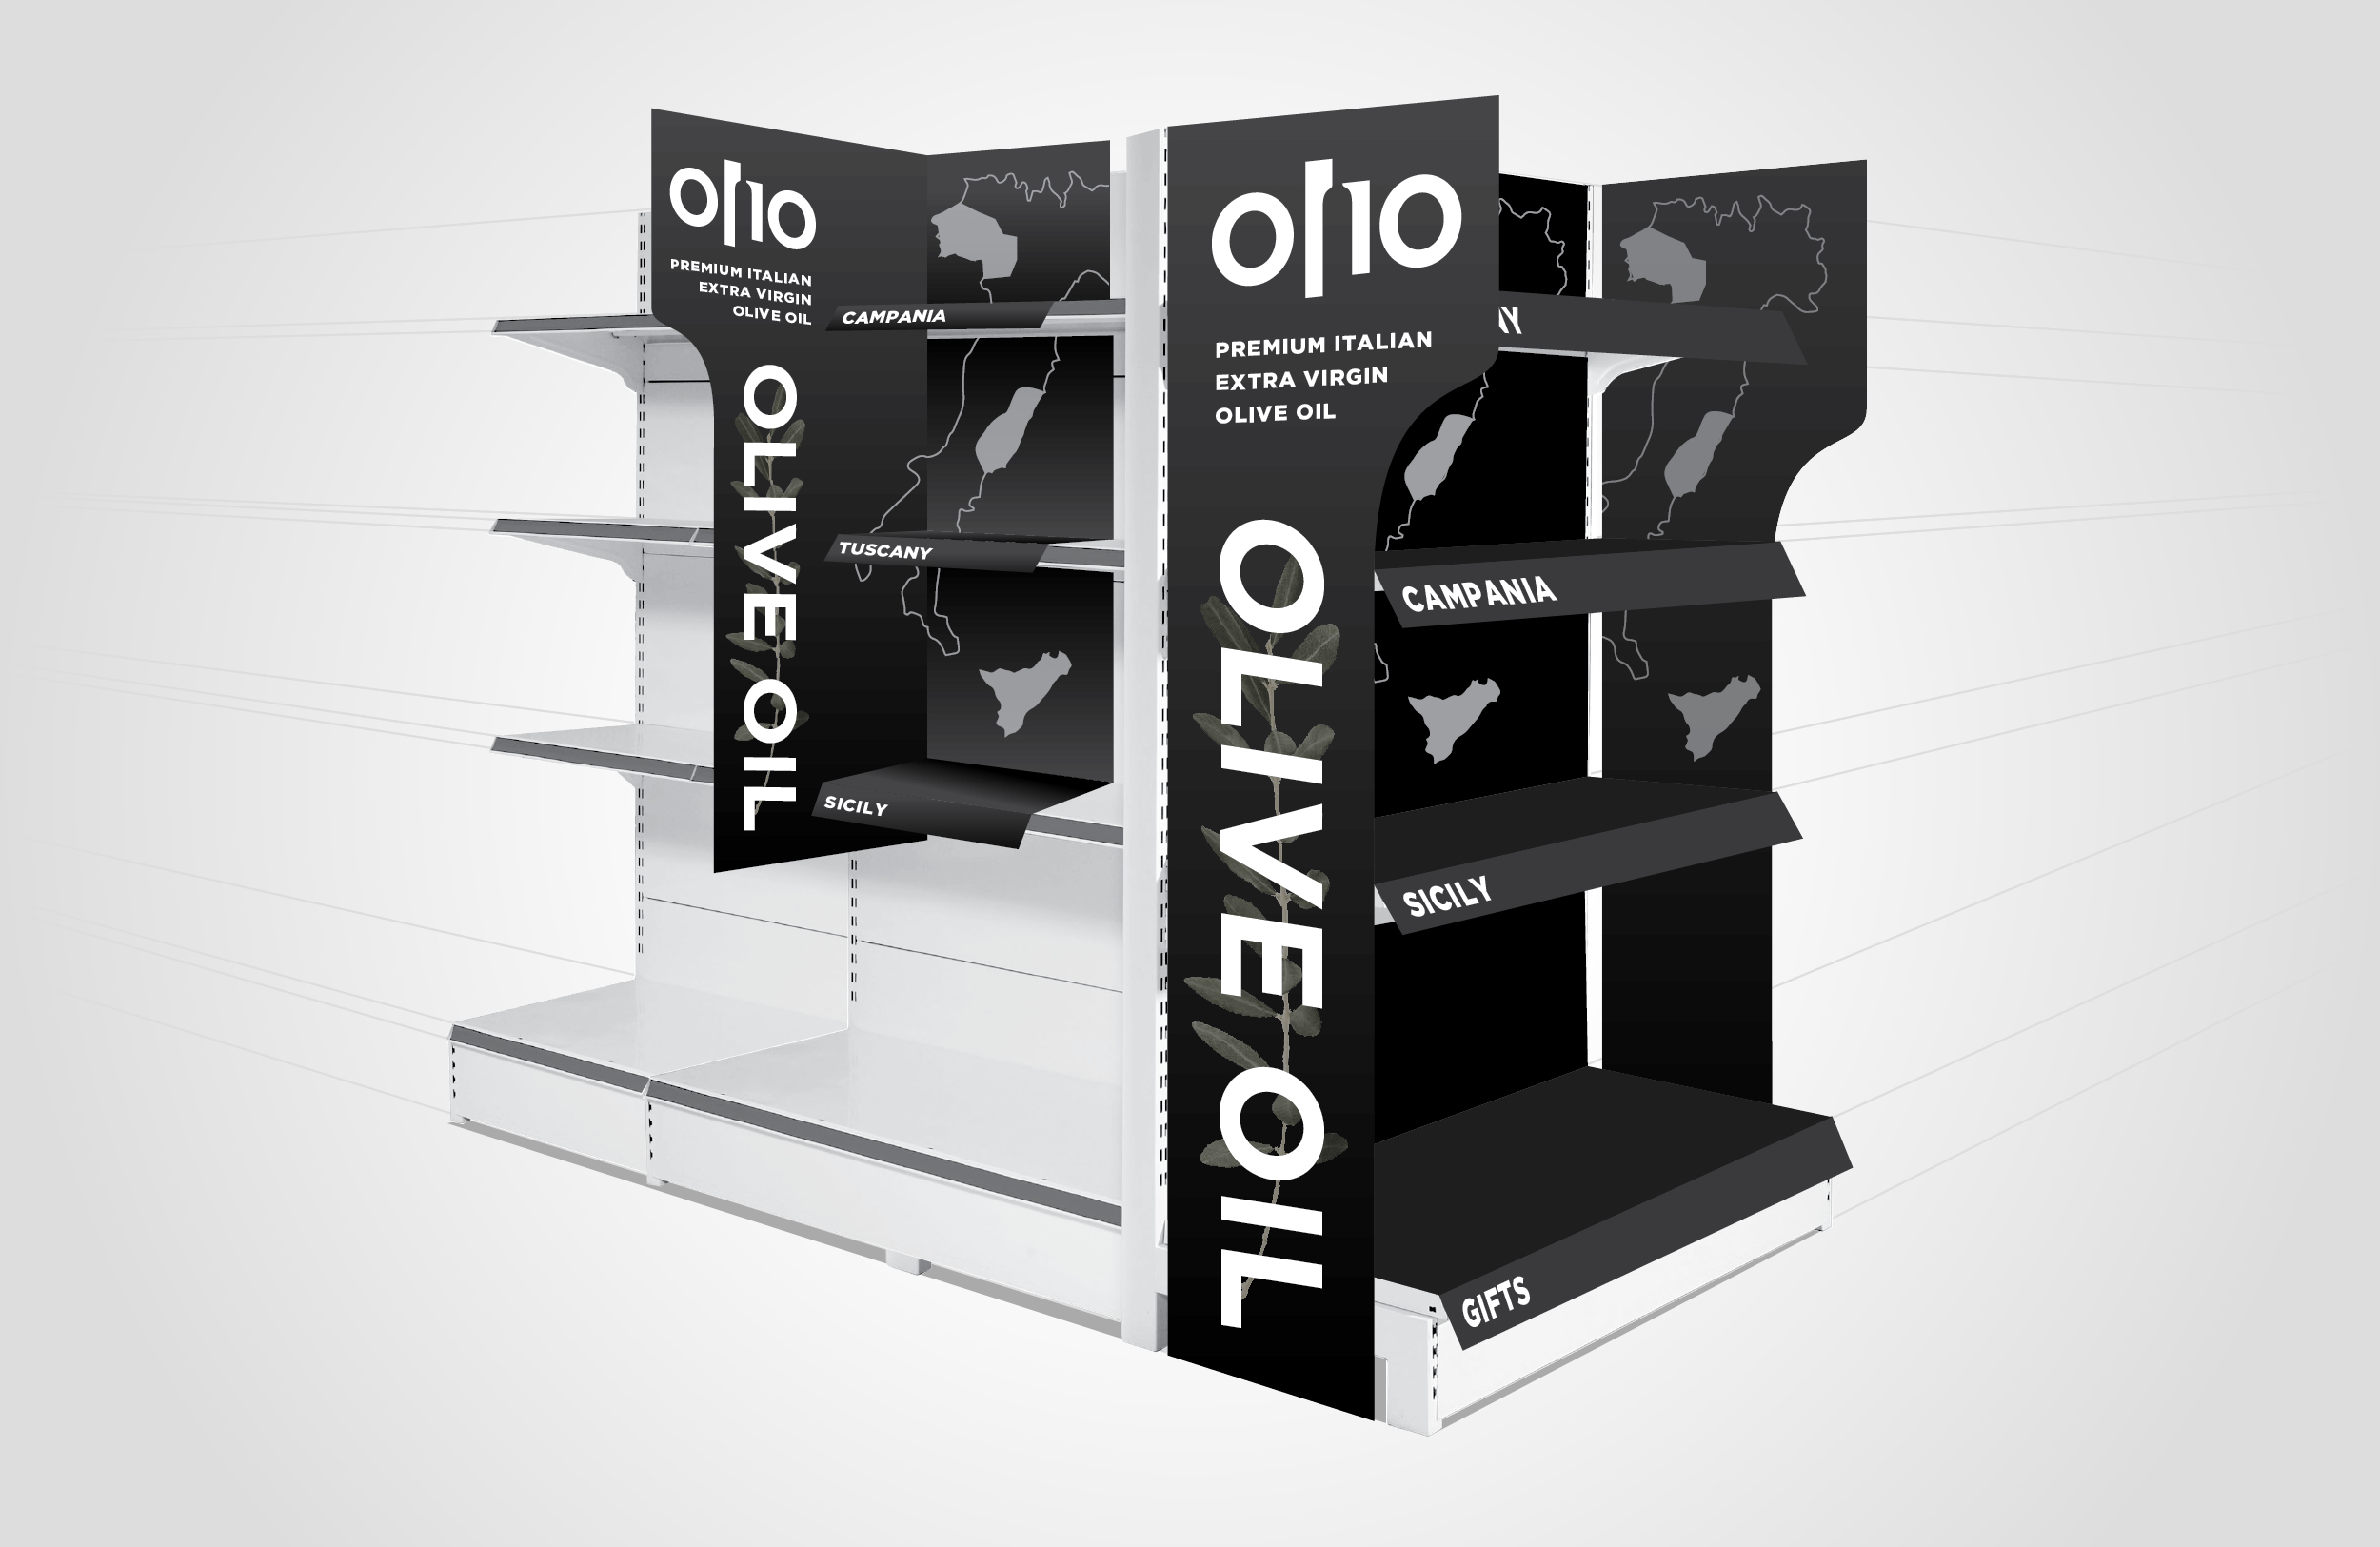 Aisle endcap and shelf-top displays designed for Olio.